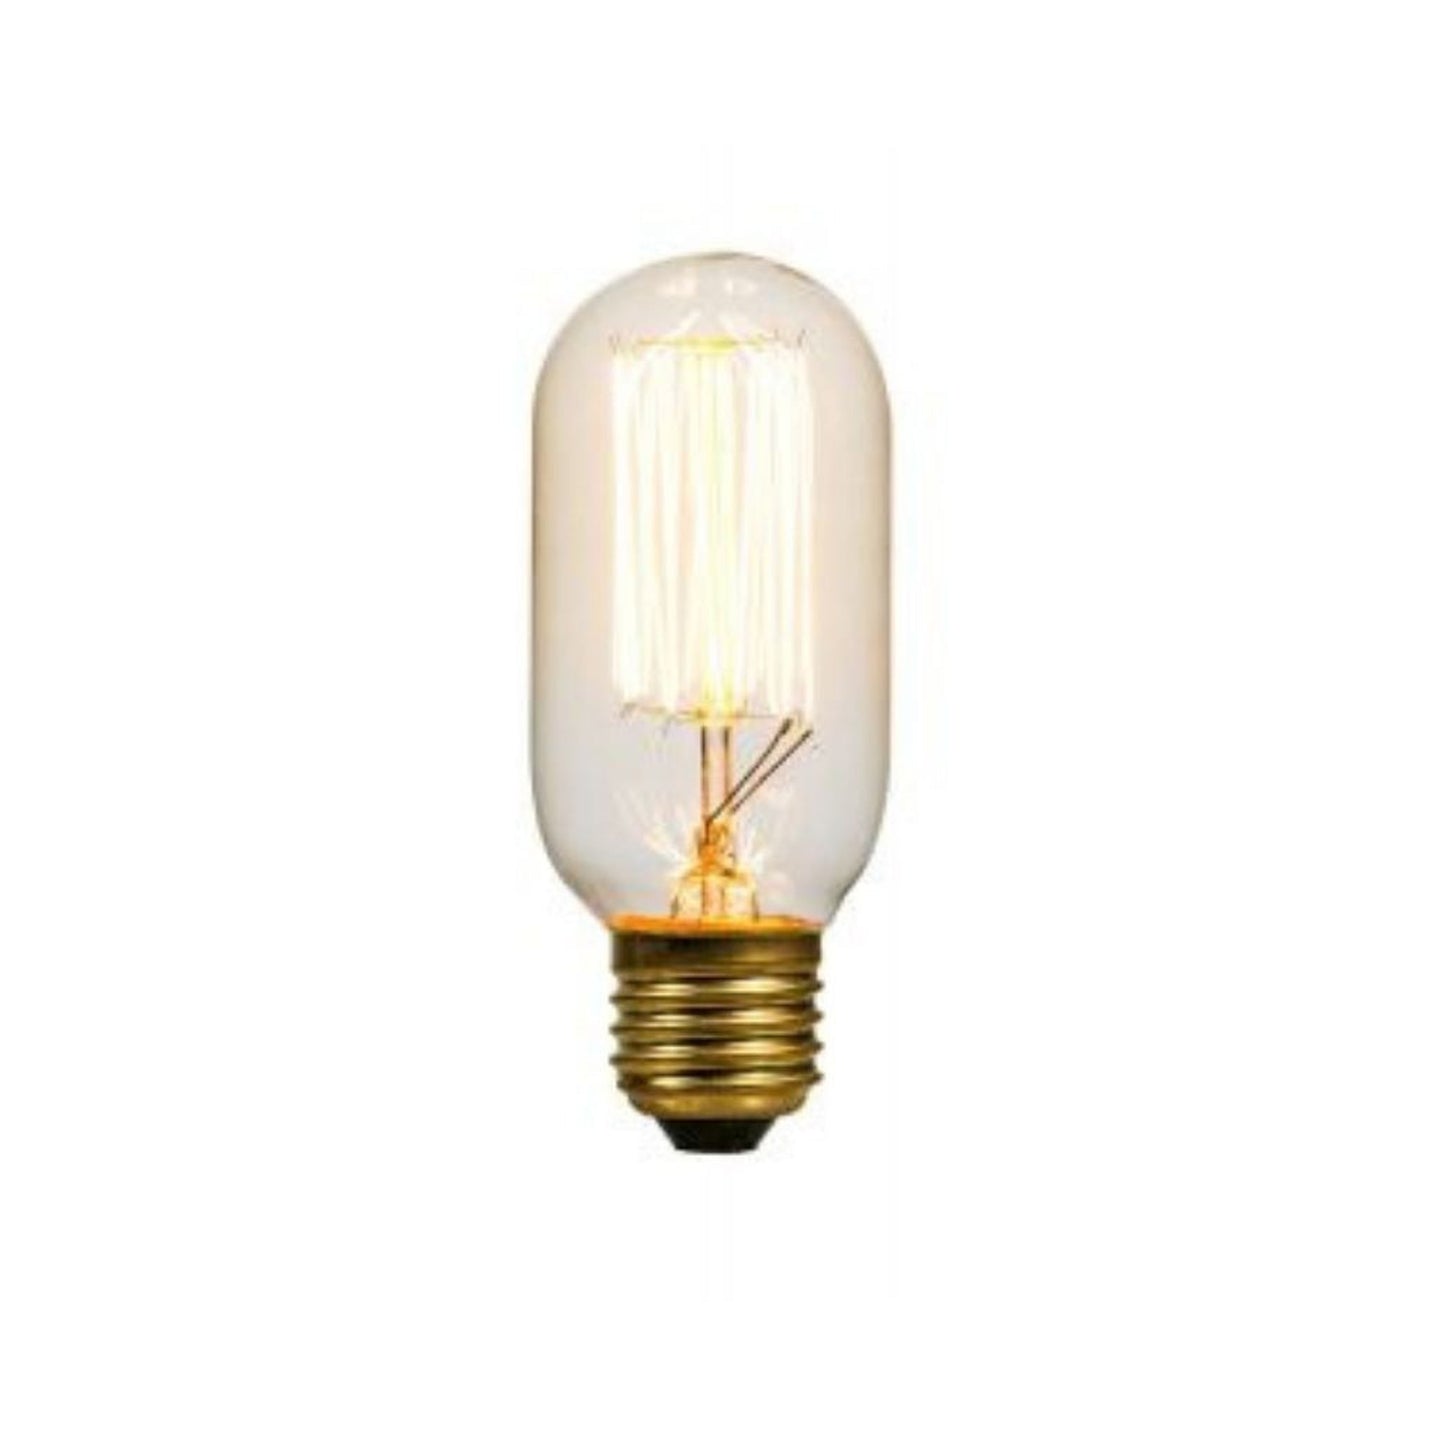 Craftmade 60-Watt T14 Clear Finish, E26 Medium Base, 4.3" M.O.L., 2200K Warm White Incandescent Light Bulb